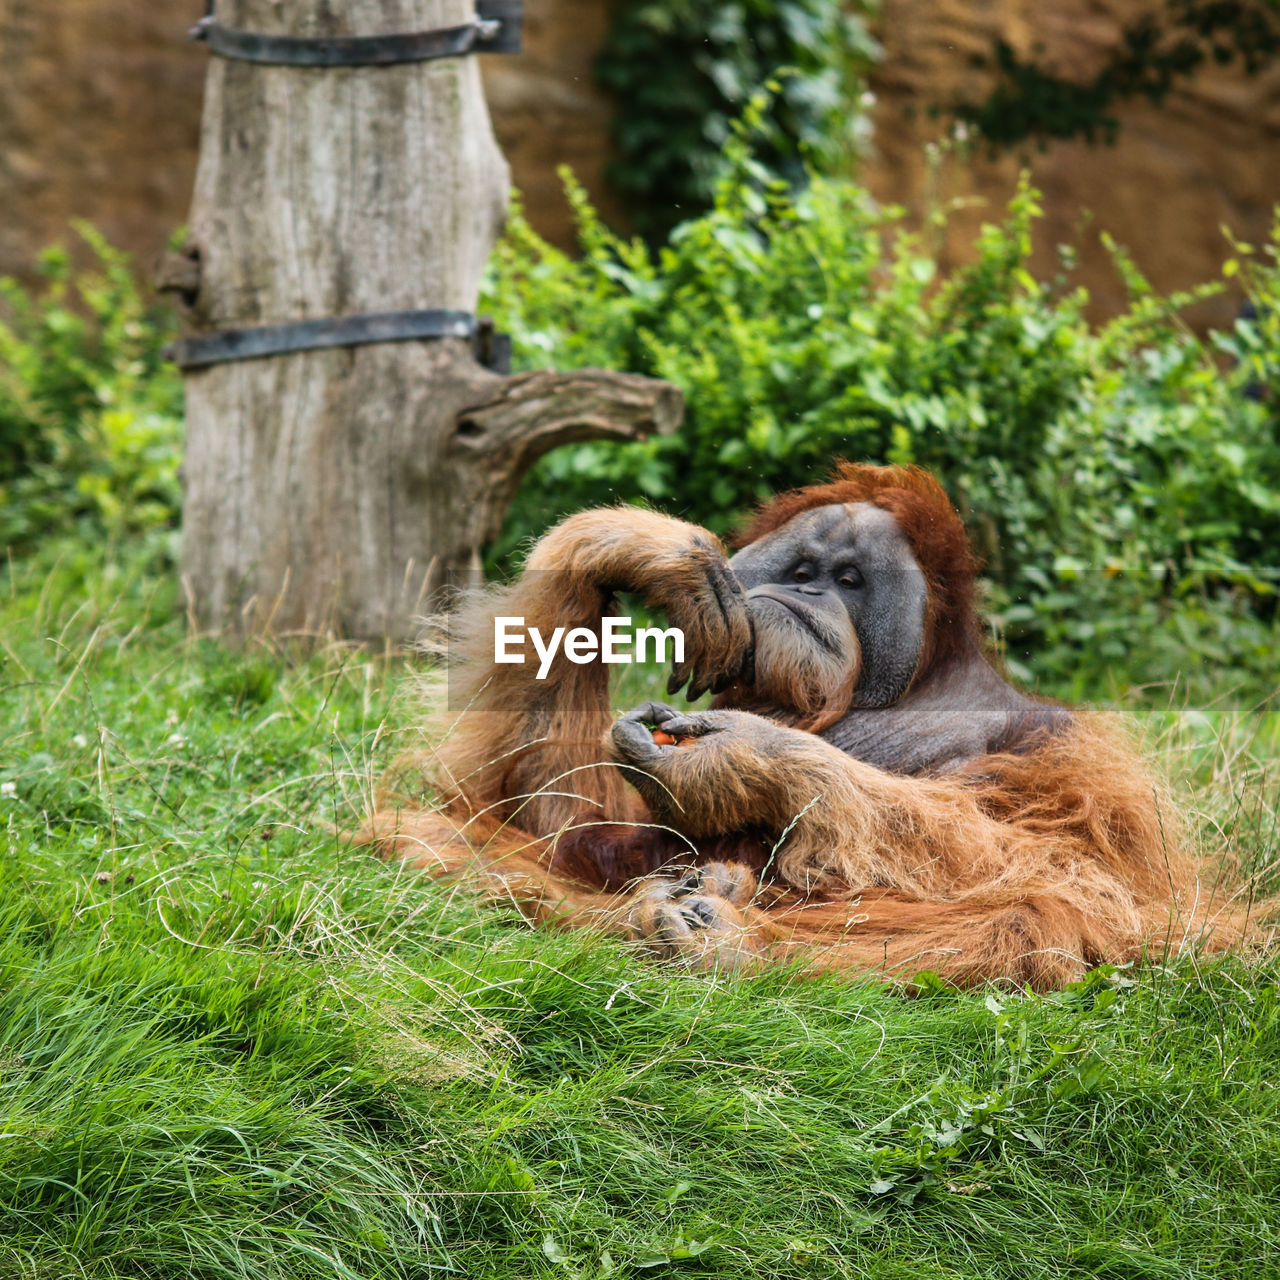 Orangutan relaxing on grassy field